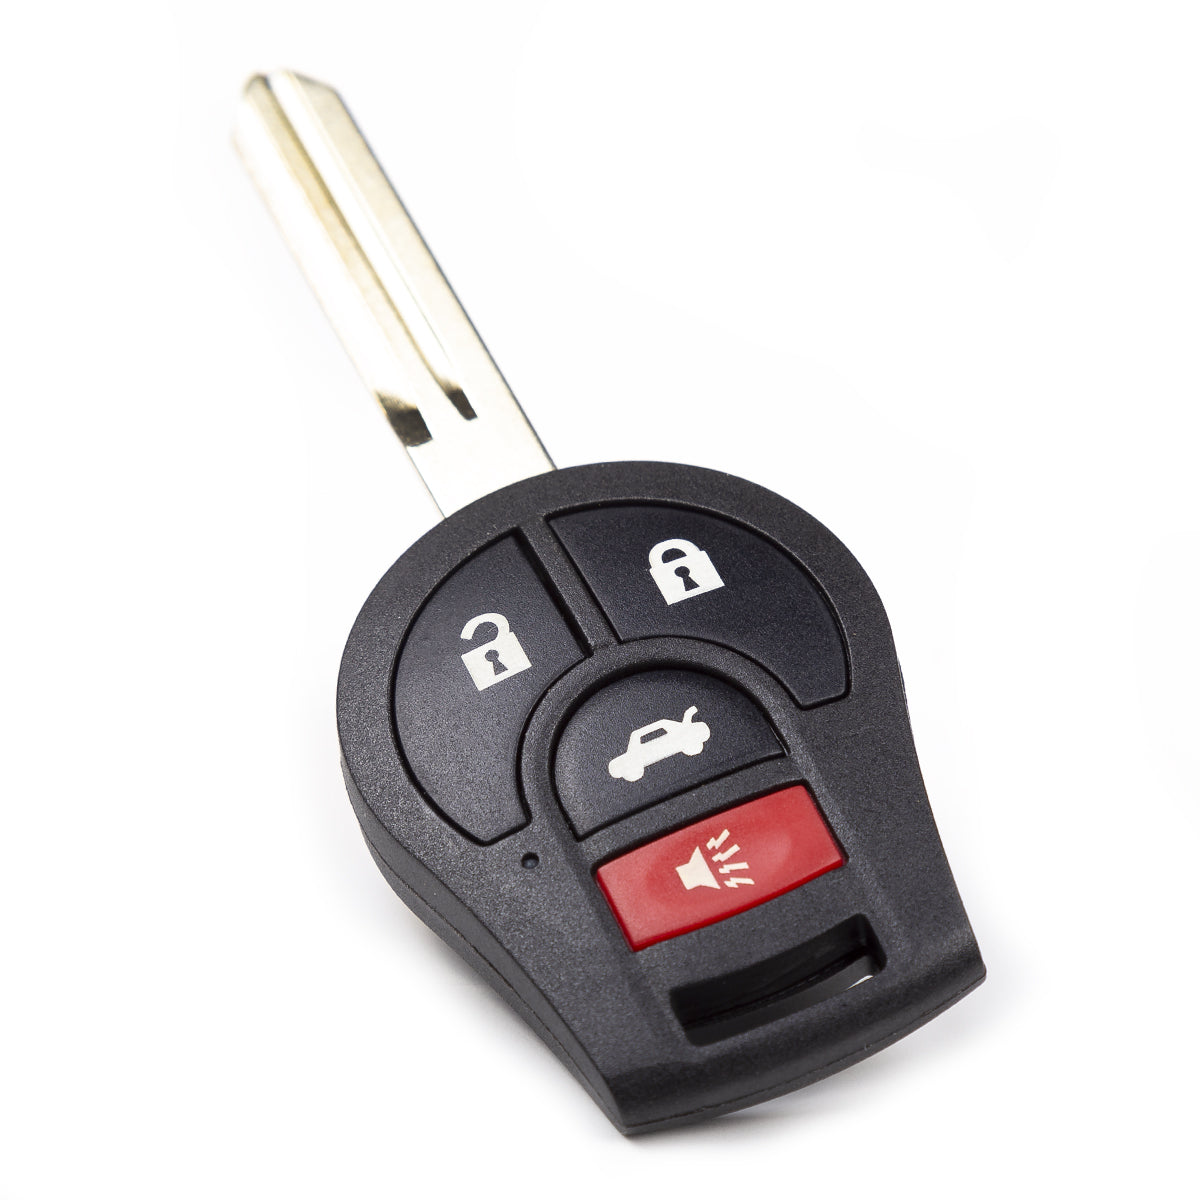 2015 Nissan Versa Note Key Fob - Aftermarket - 4 Buttons Fob FCC# CWTWB1U751 - ID46 Chip